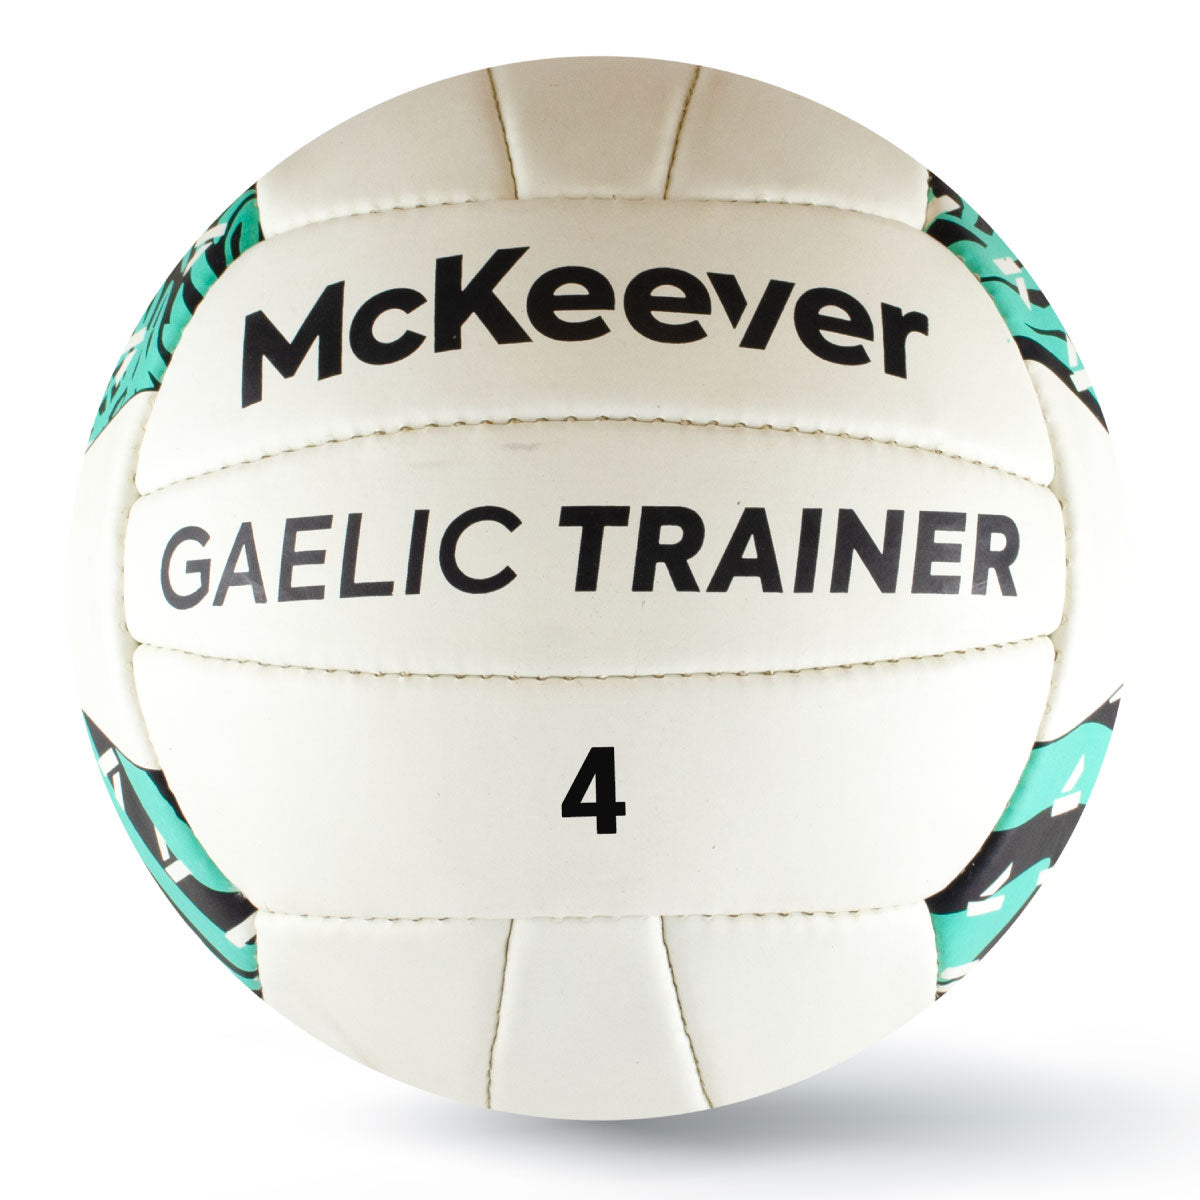 Mc Keever Gaelic Trainer Footballs (Size 4) Each